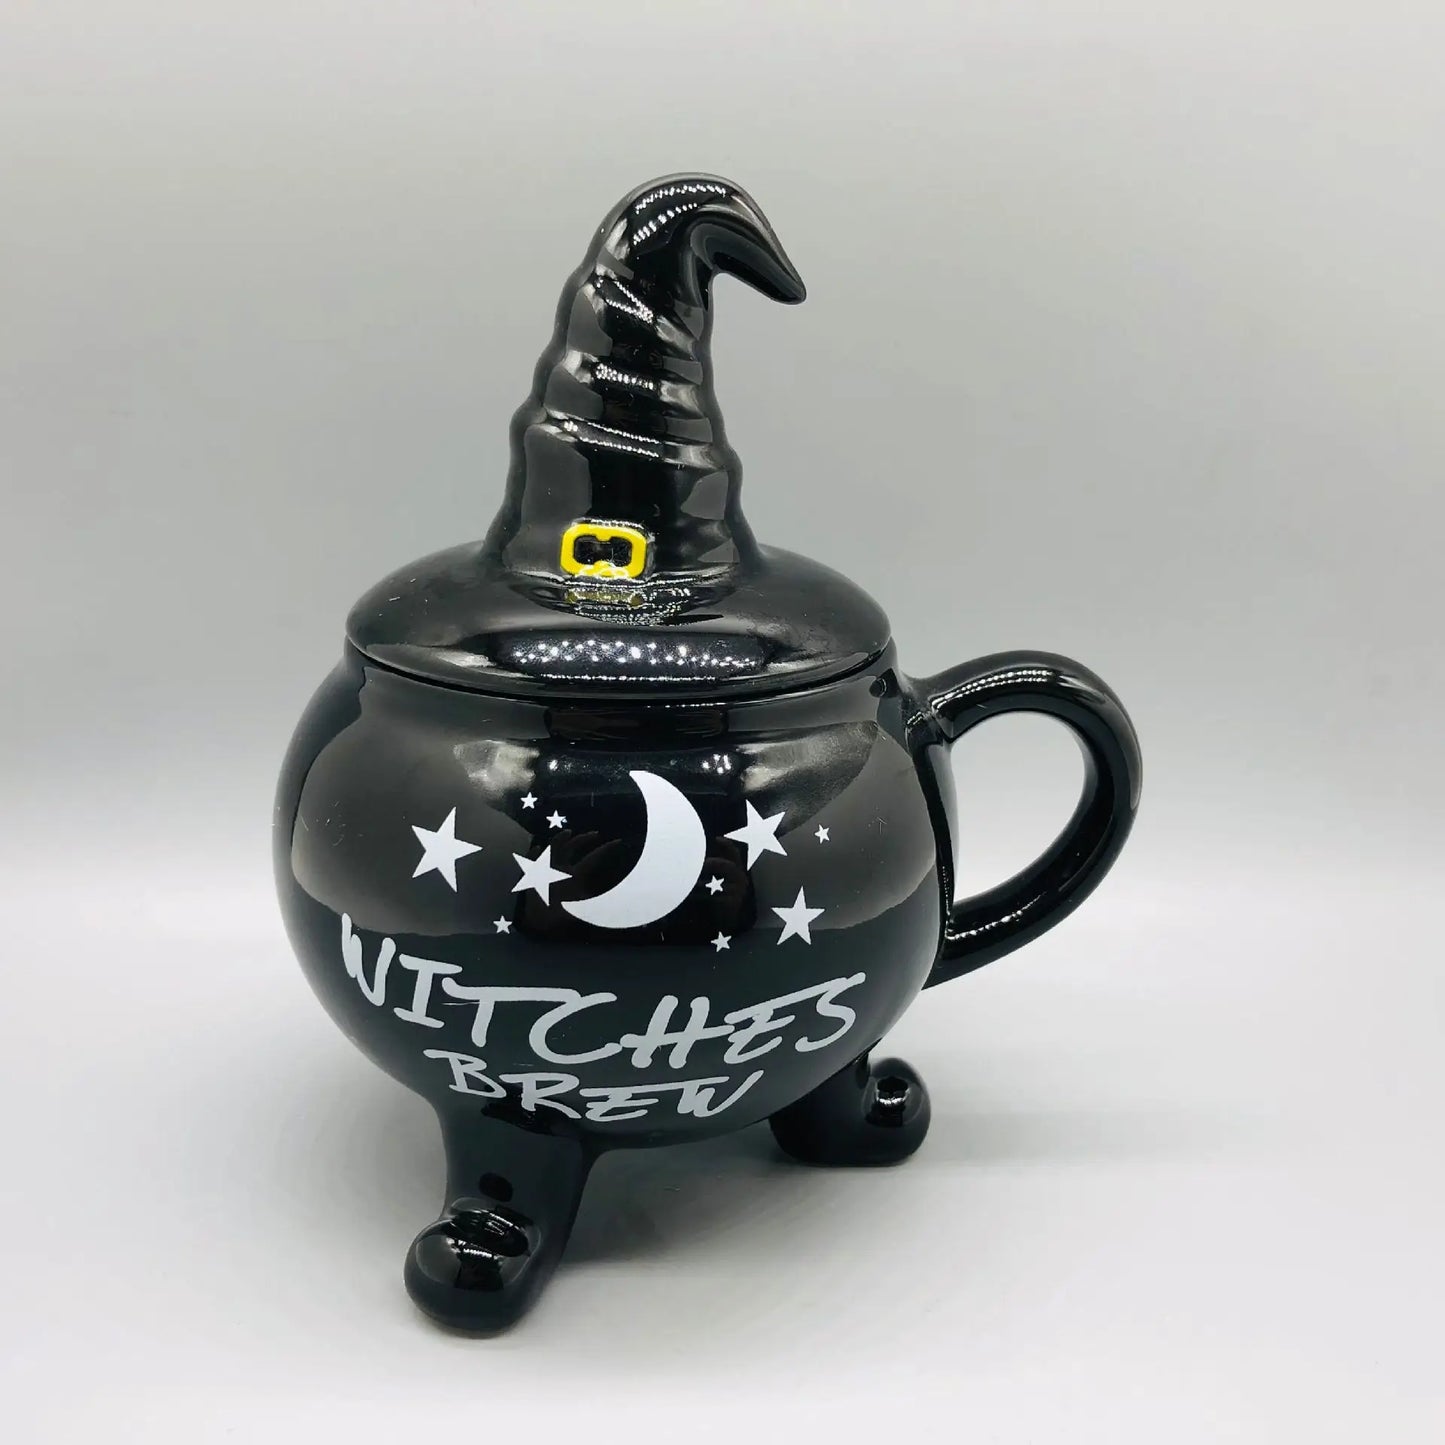 Witch Coffee Mug